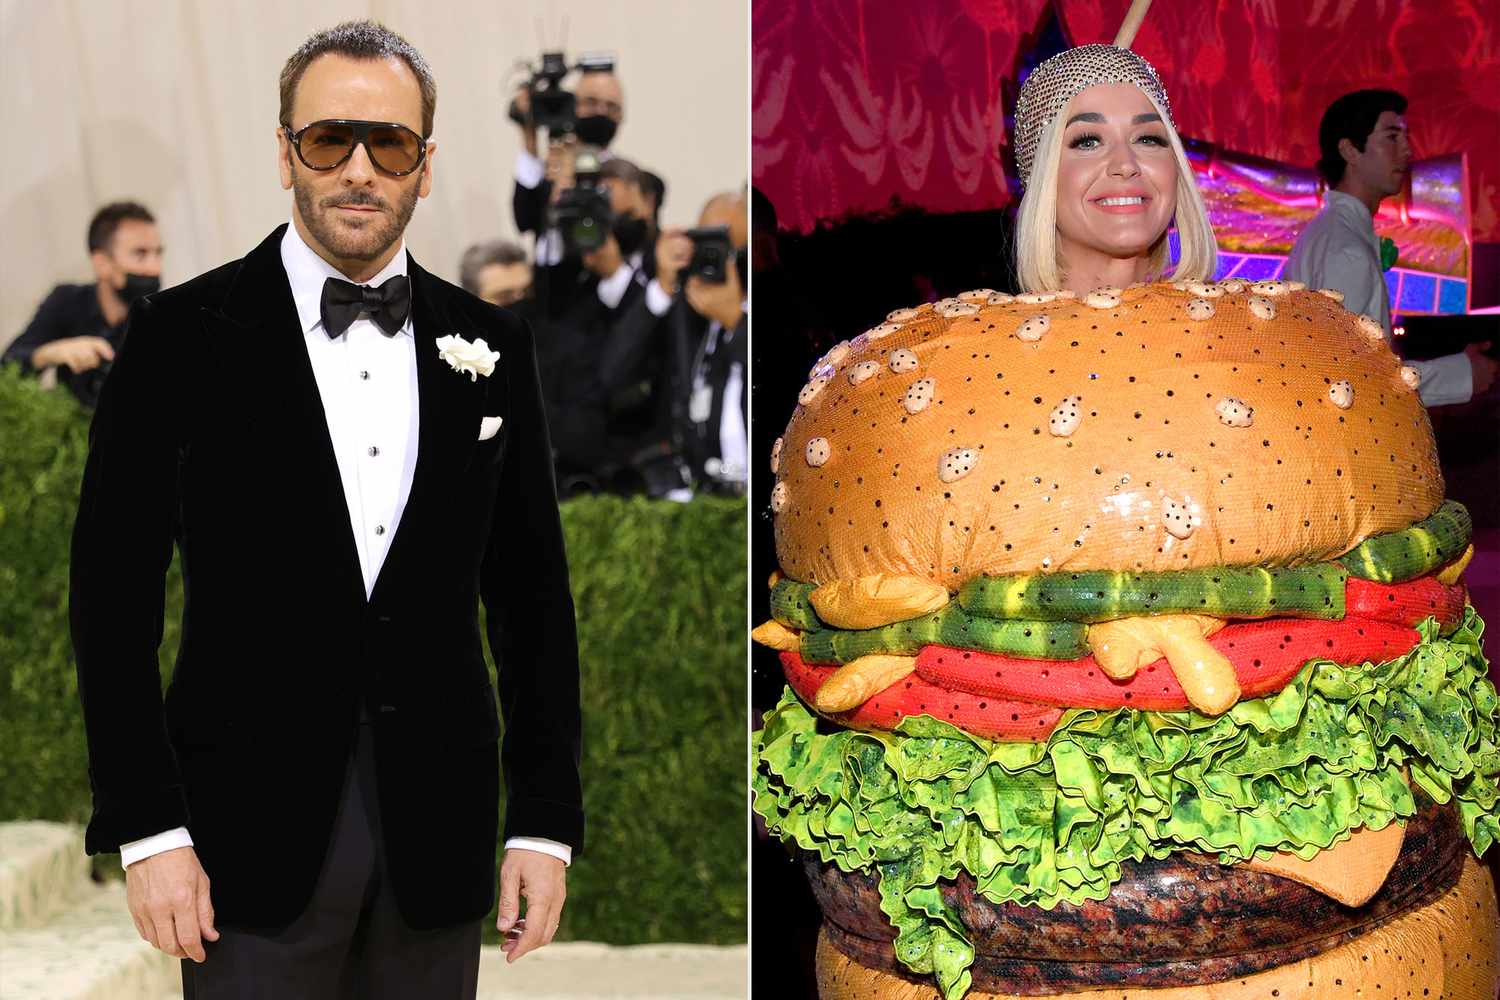 Beperkt Centimeter samenzwering Tom Ford shades Katy Perry's Met Gala hamburger and chandelier looks |  EW.com